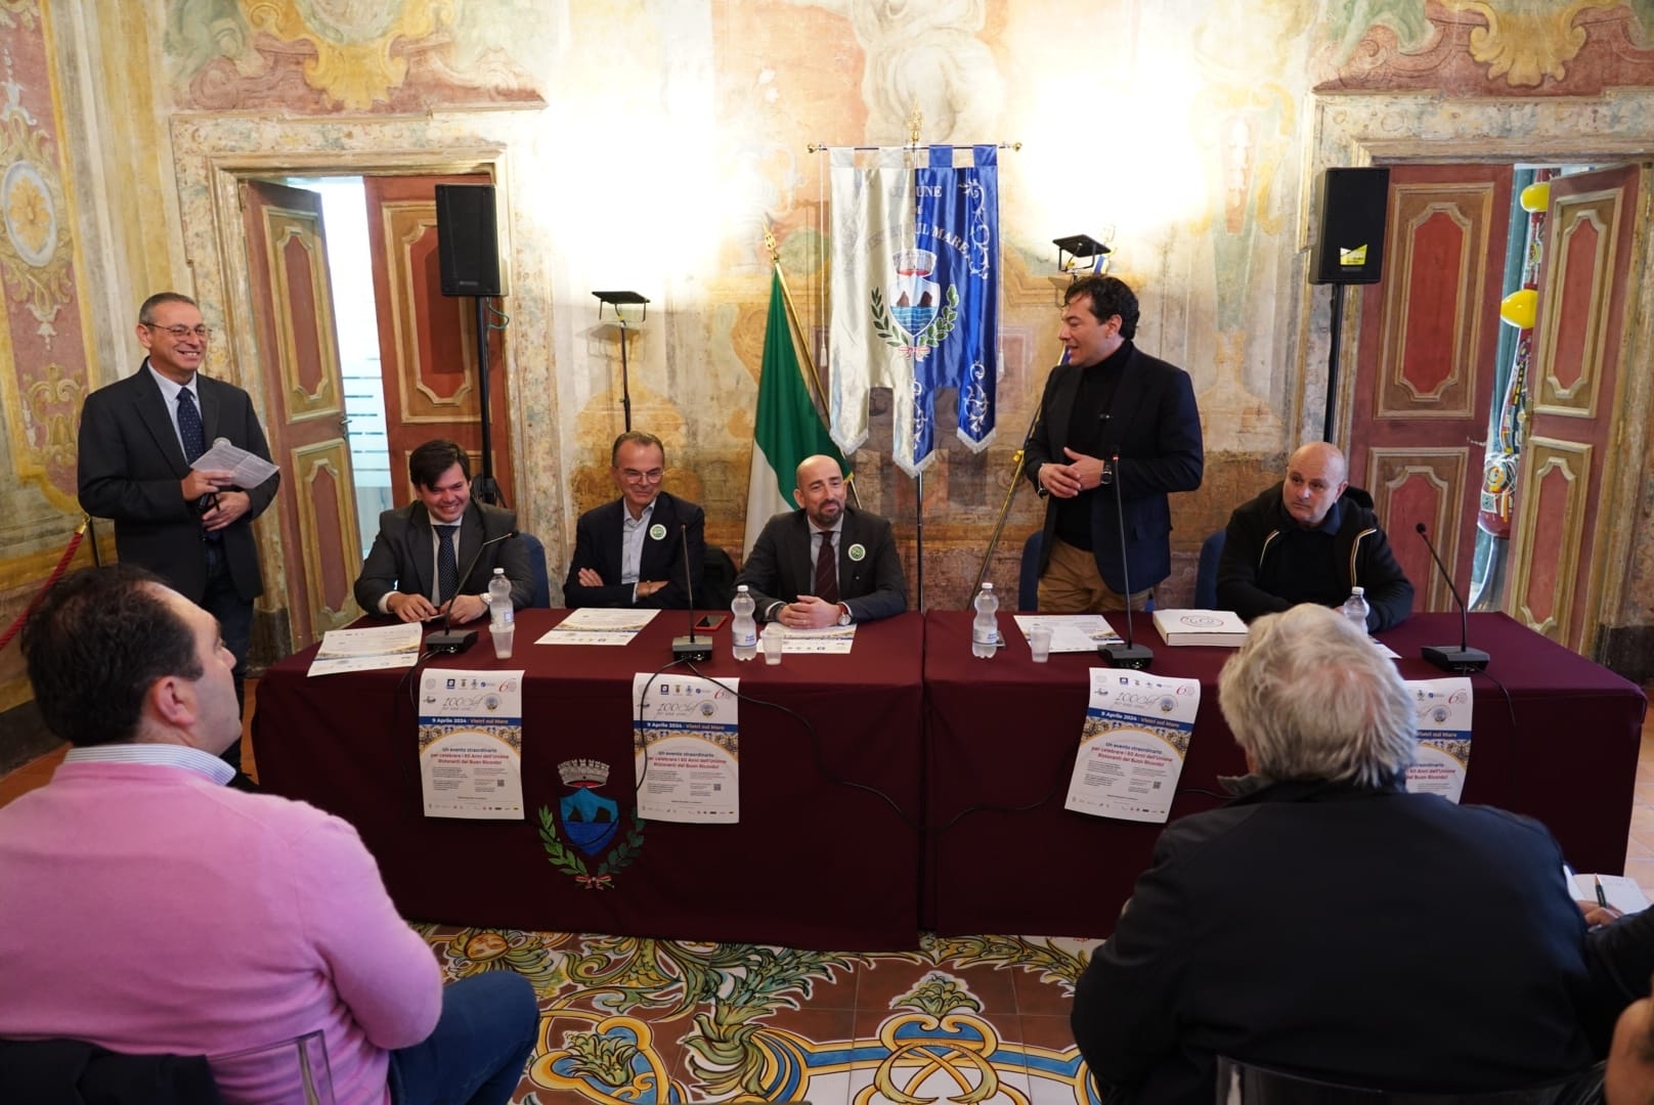 Daniele Benincasa, Luciano Spigaroli, Cesare Carbone, Giovanni De Simone, Antonio Solimene